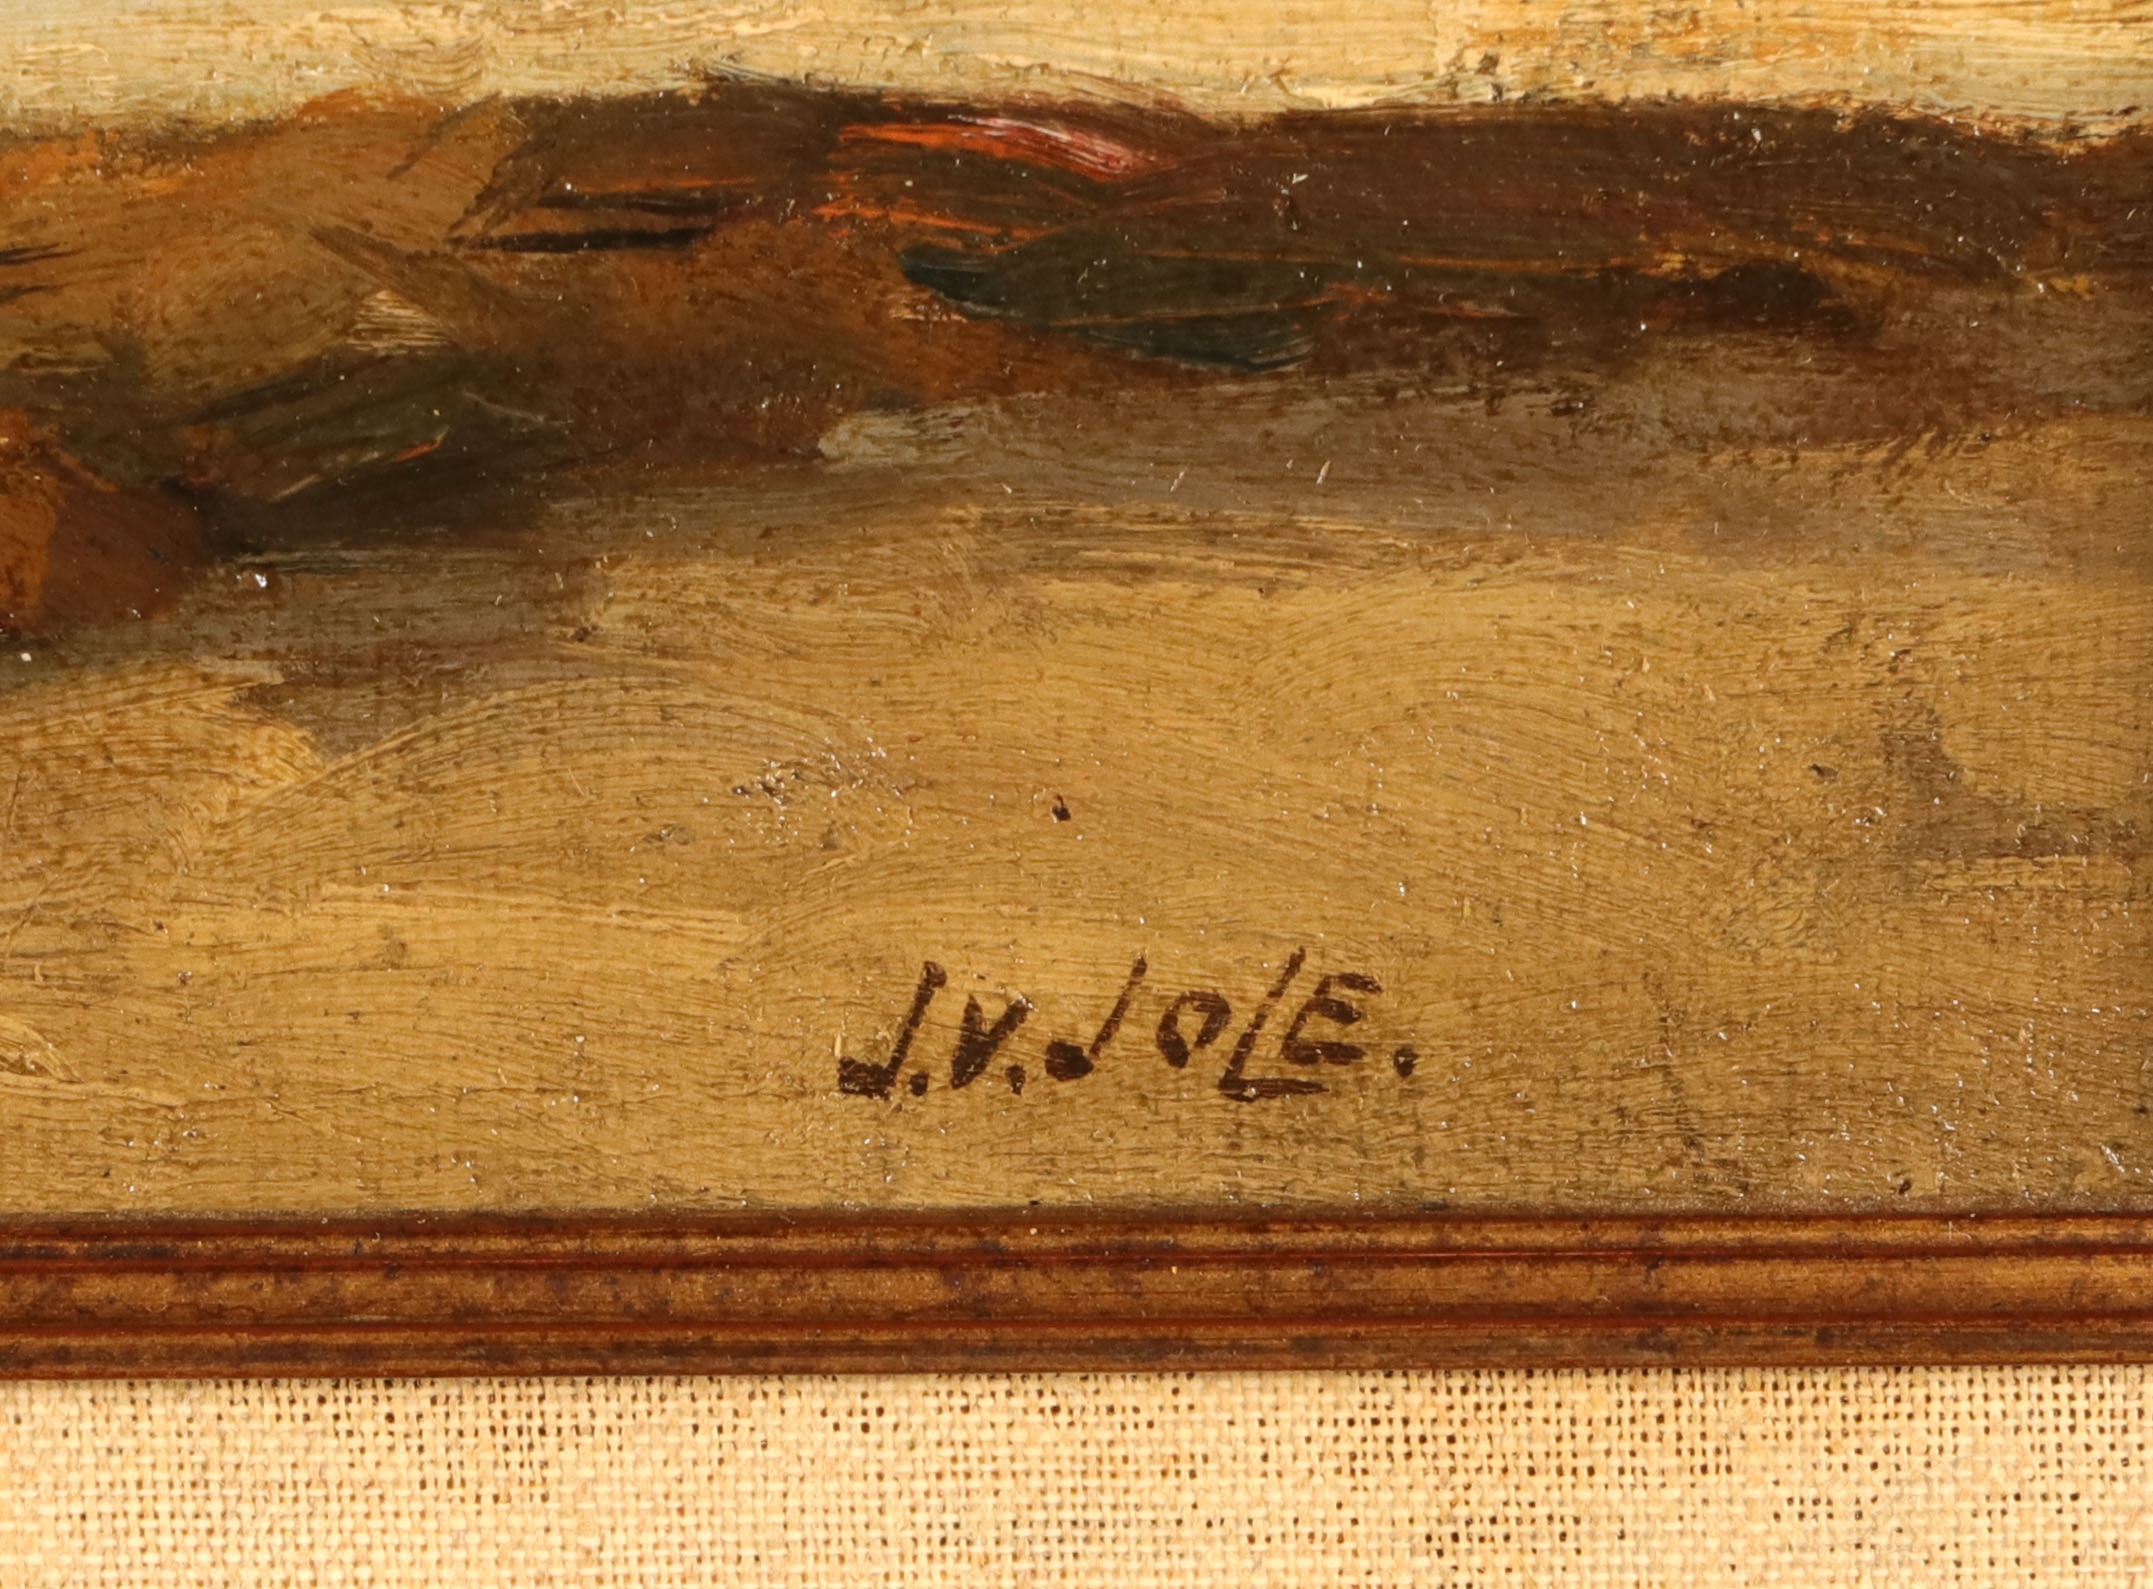 Artwork by Joseph Gerardus van Jole, Signed J, Made of Oil on canvas on panel